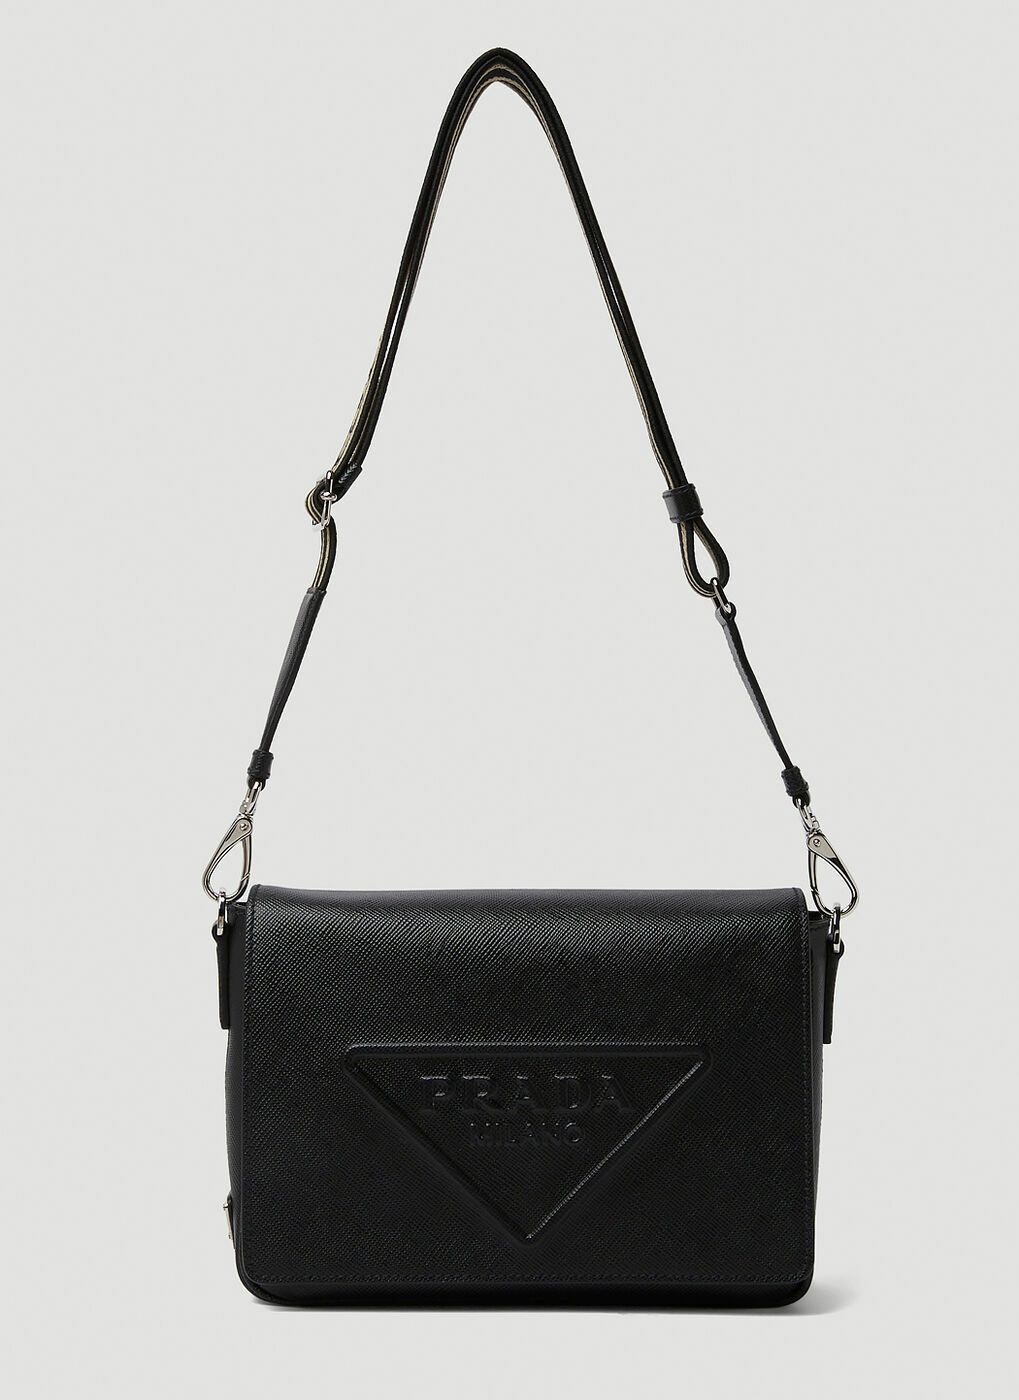 Prada Triangle Flap Leather Shoulder Bag